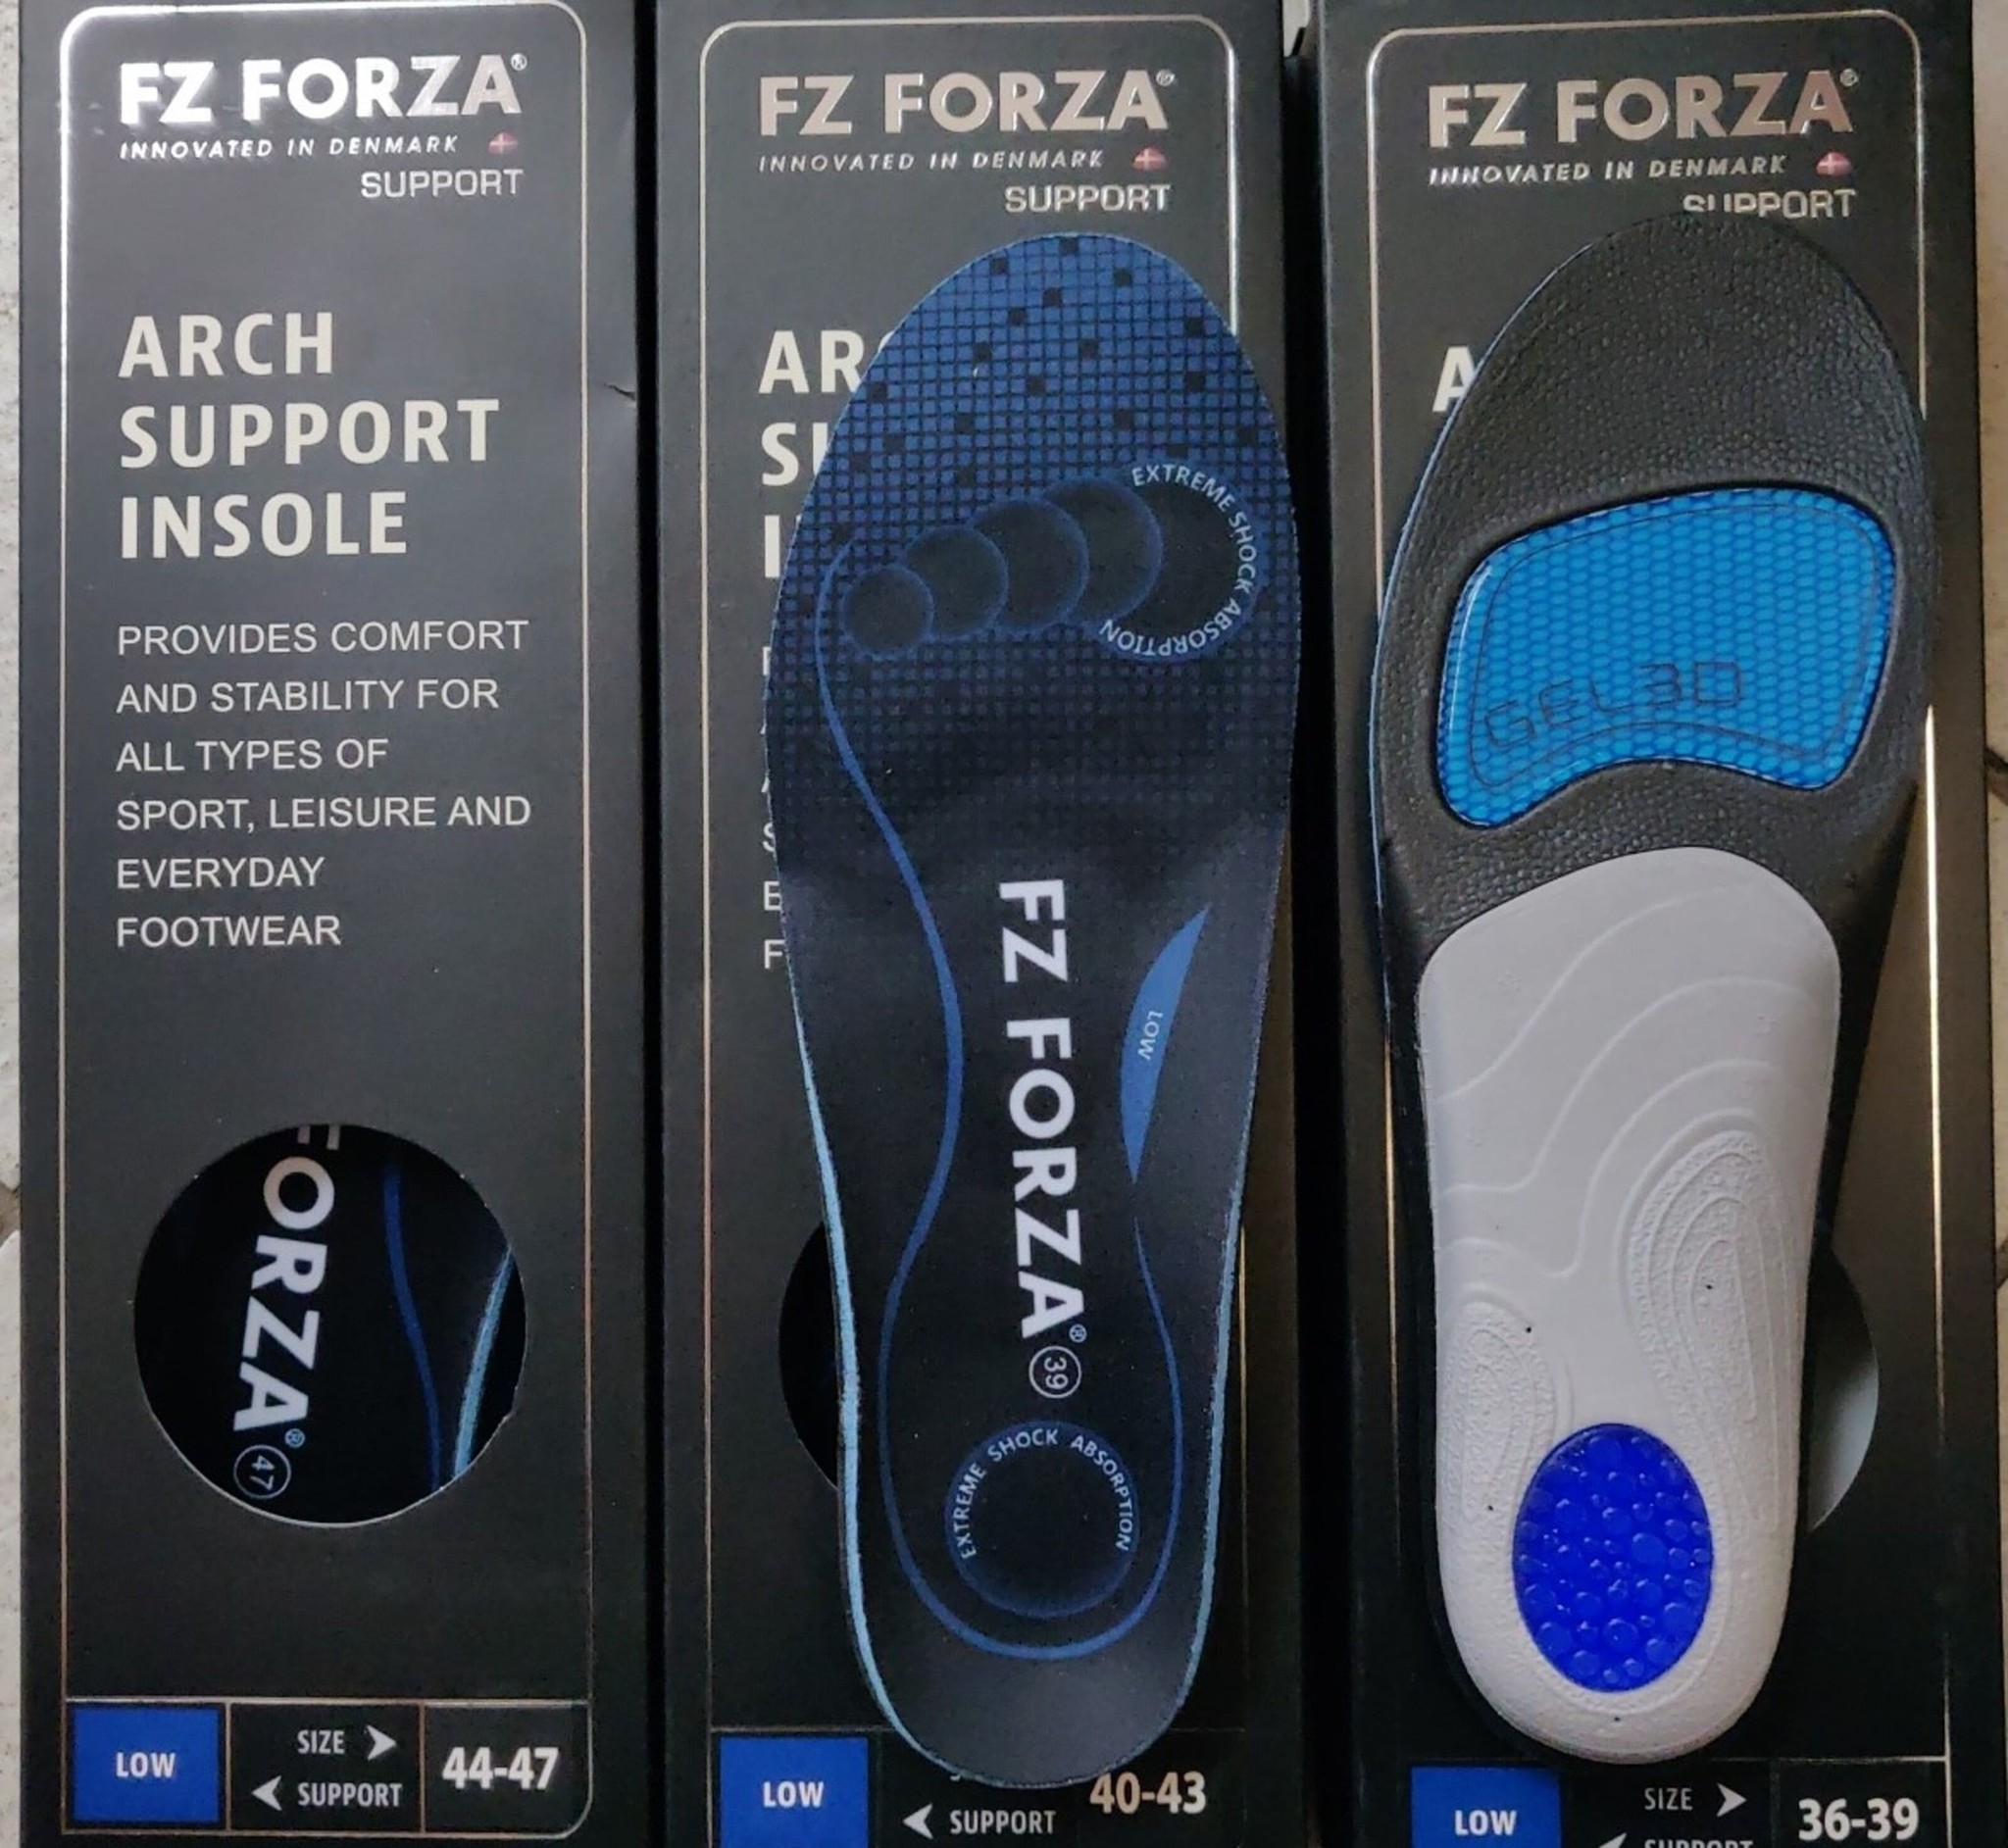 FZ Forza inlegzolen - Arch Support kopen? - KW racket speciaalzaak